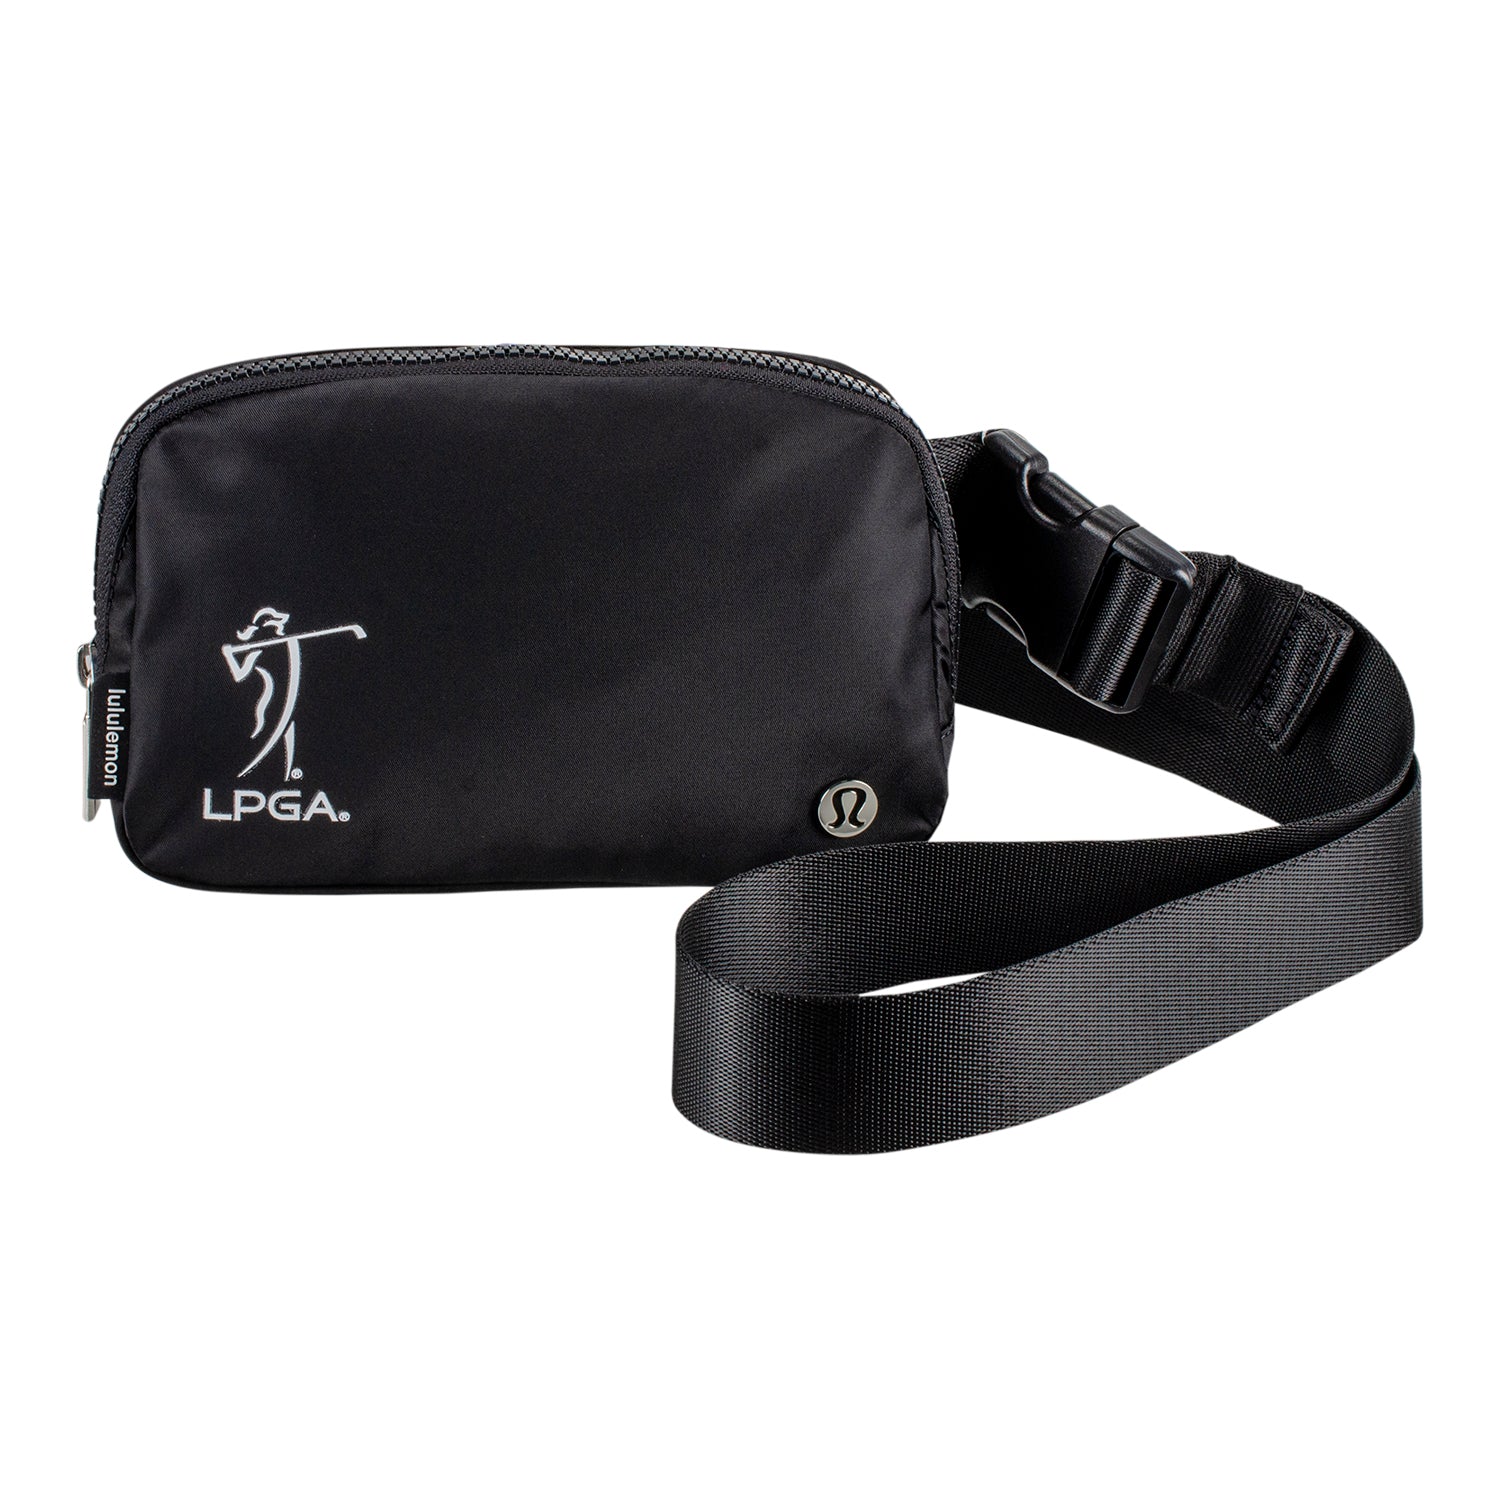 NEW Lululemon Everywhere Belt Bag Black Fanny Pack purse 100